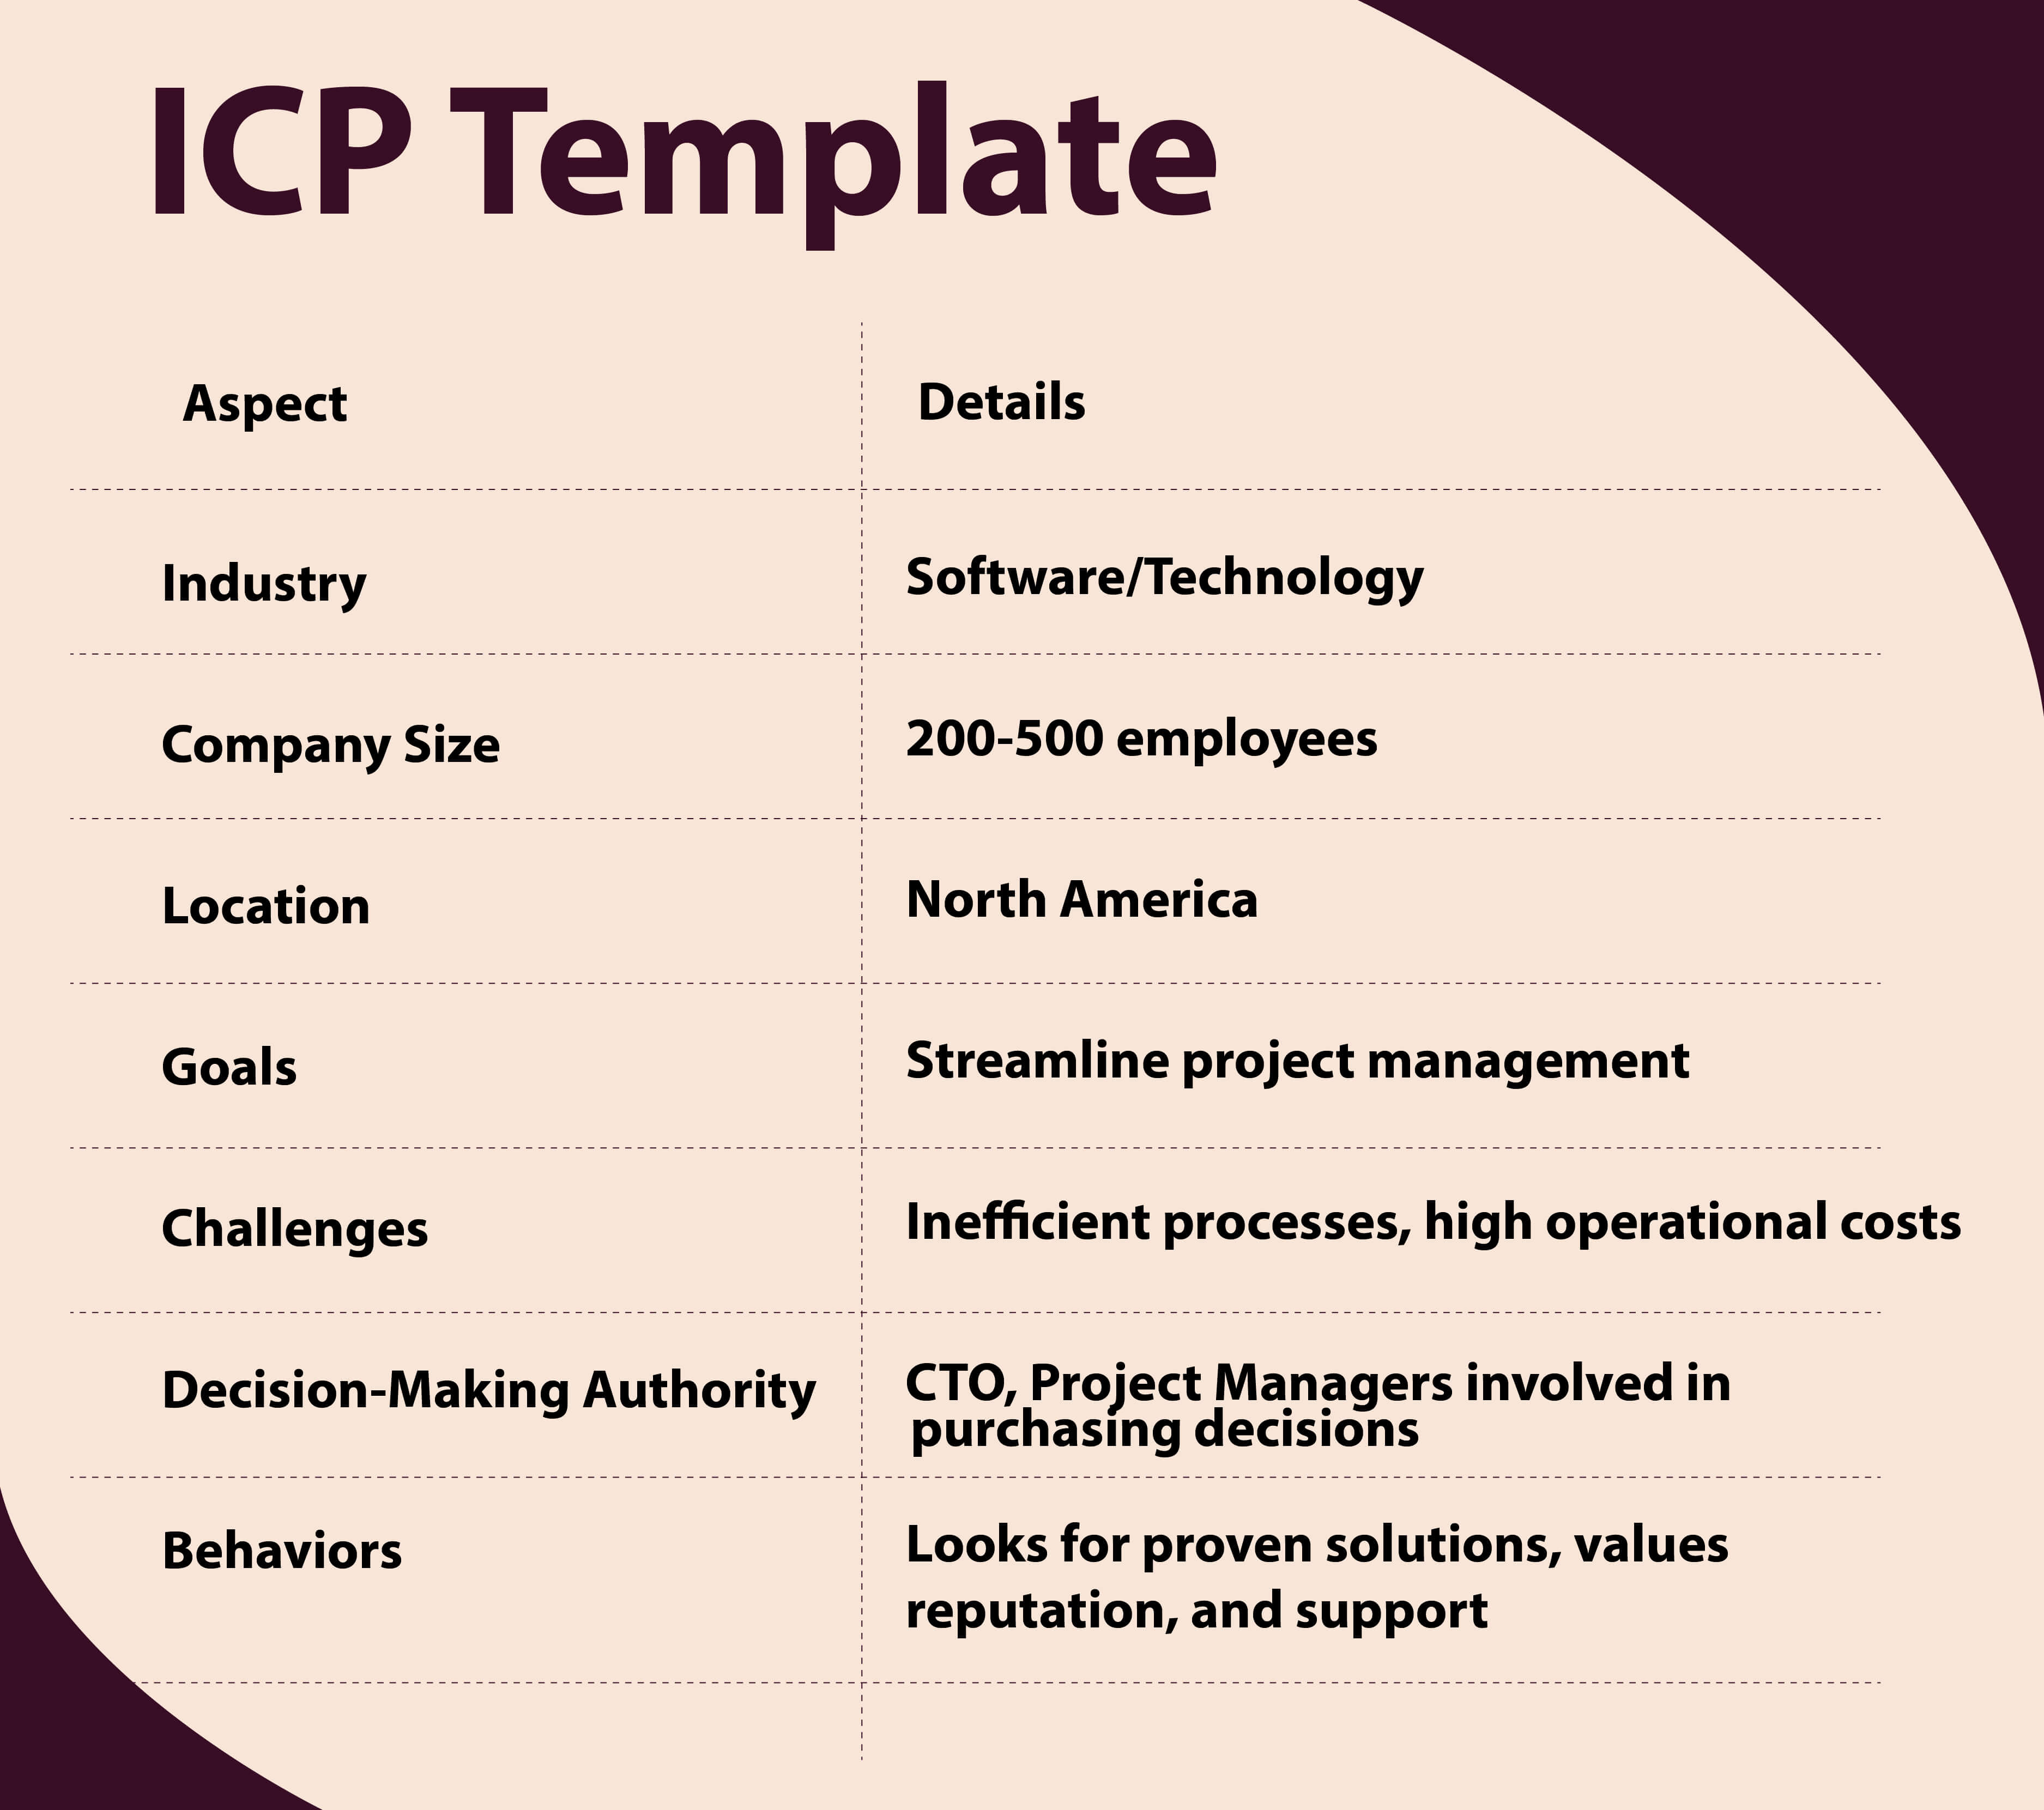 ICP Template